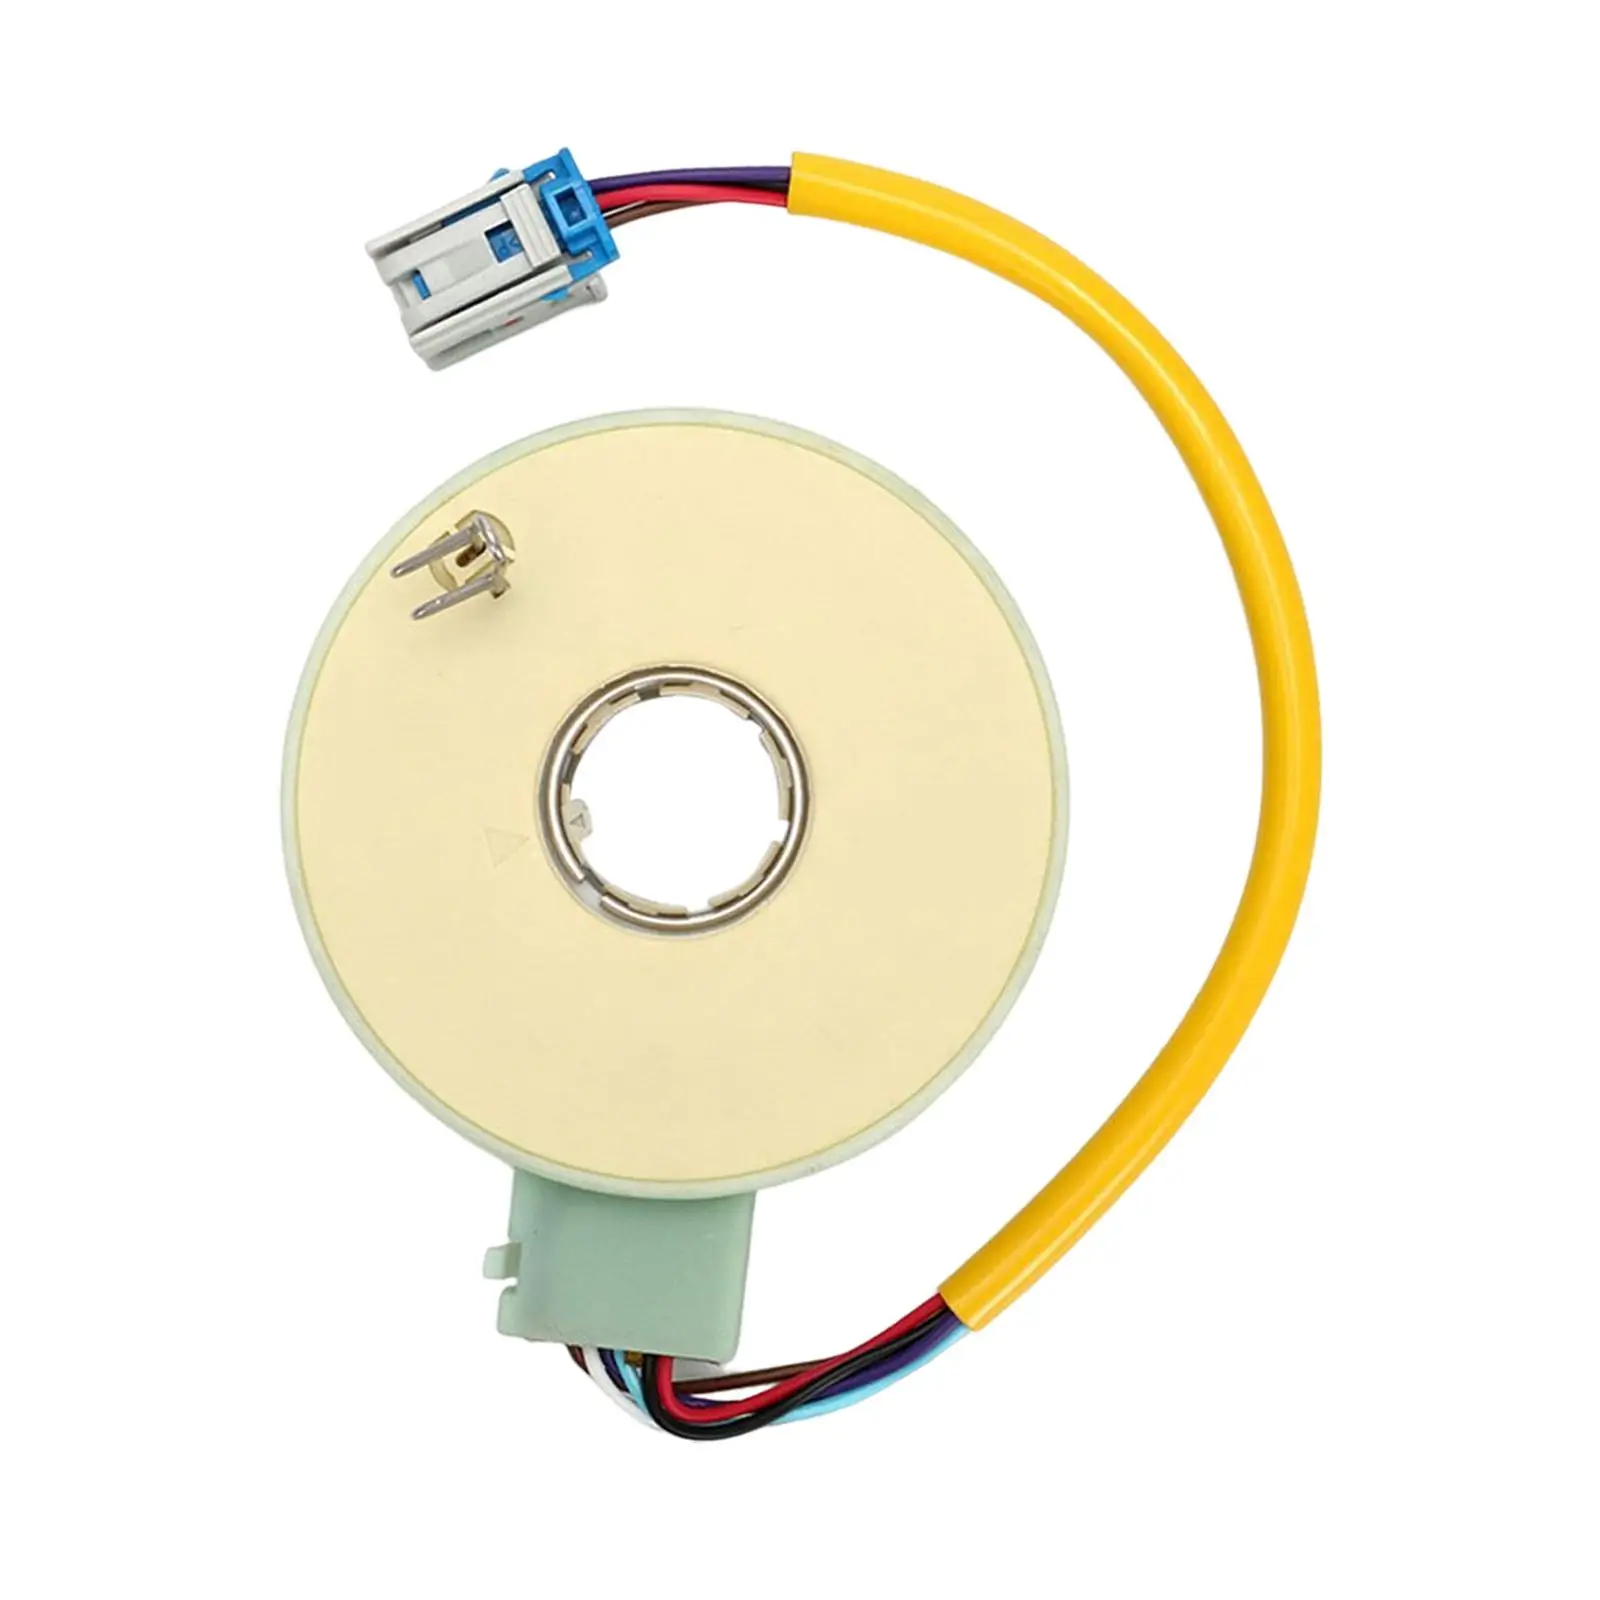 Steering Angle Sensor Replaces Zfa188 Spare Parts 51826525 55701321 for Fiat PUNTO C1005 C1006 Lenkwinkelsensor C5005 C5006